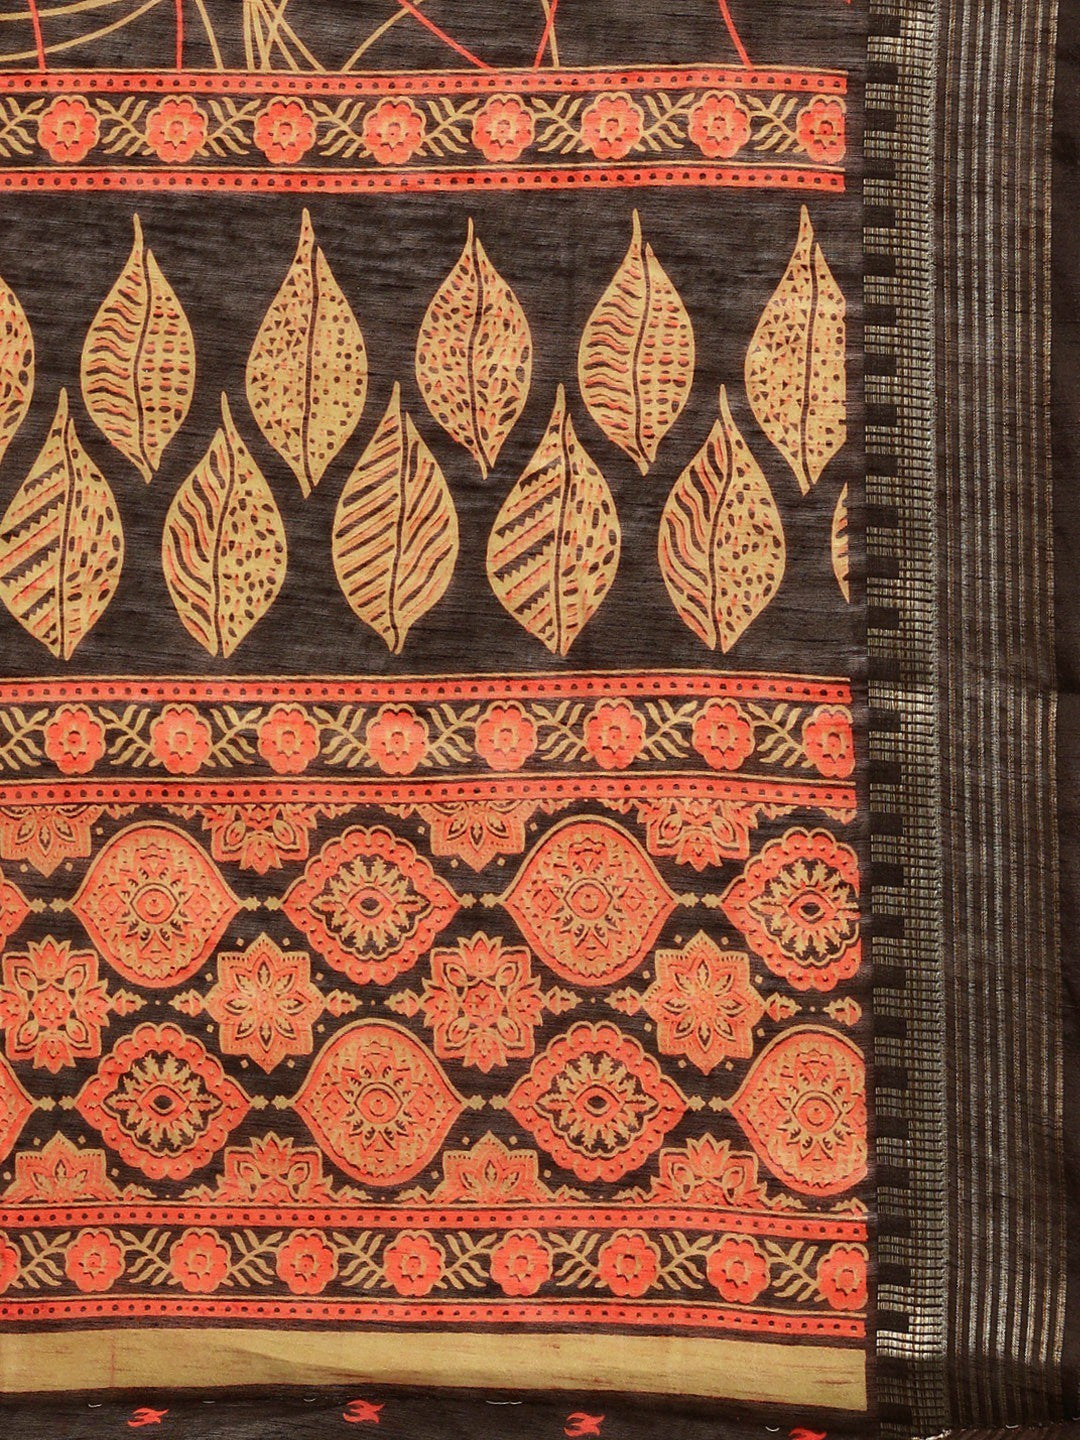 Women's Brown Art Silk Printed Saree - Ahika